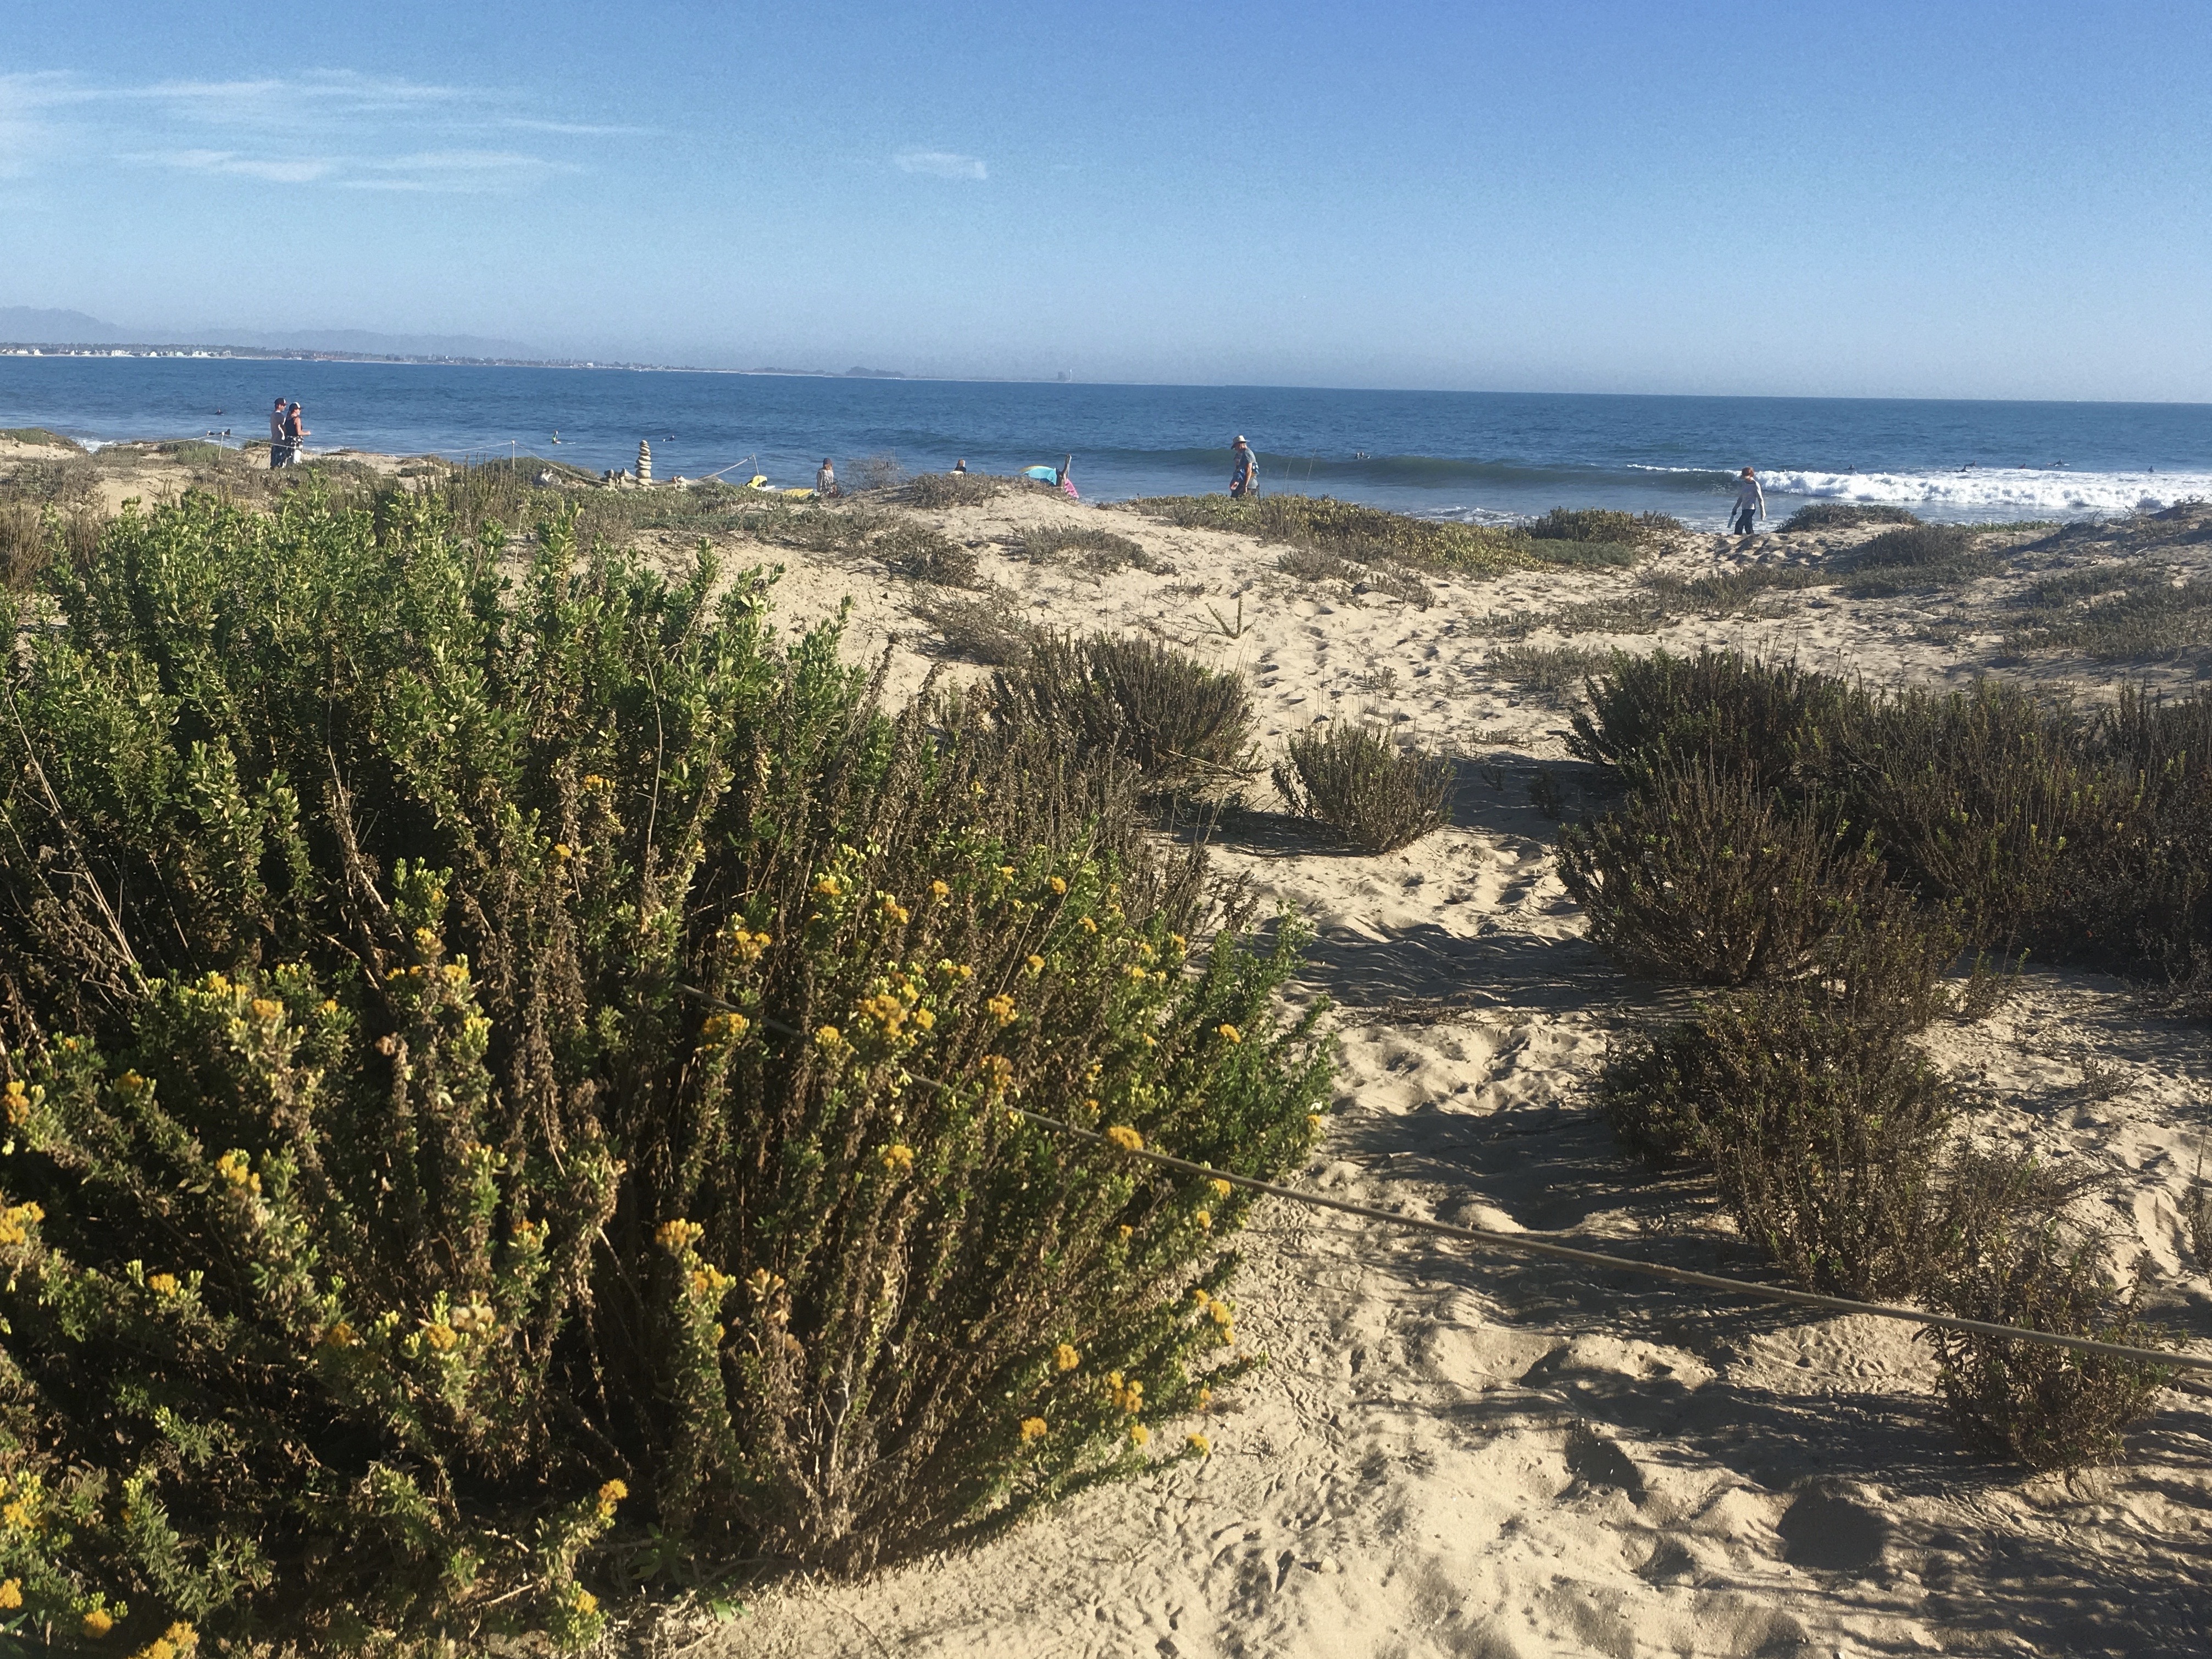 Case Studies of Natural Shoreline Infrastructure in Coastal California